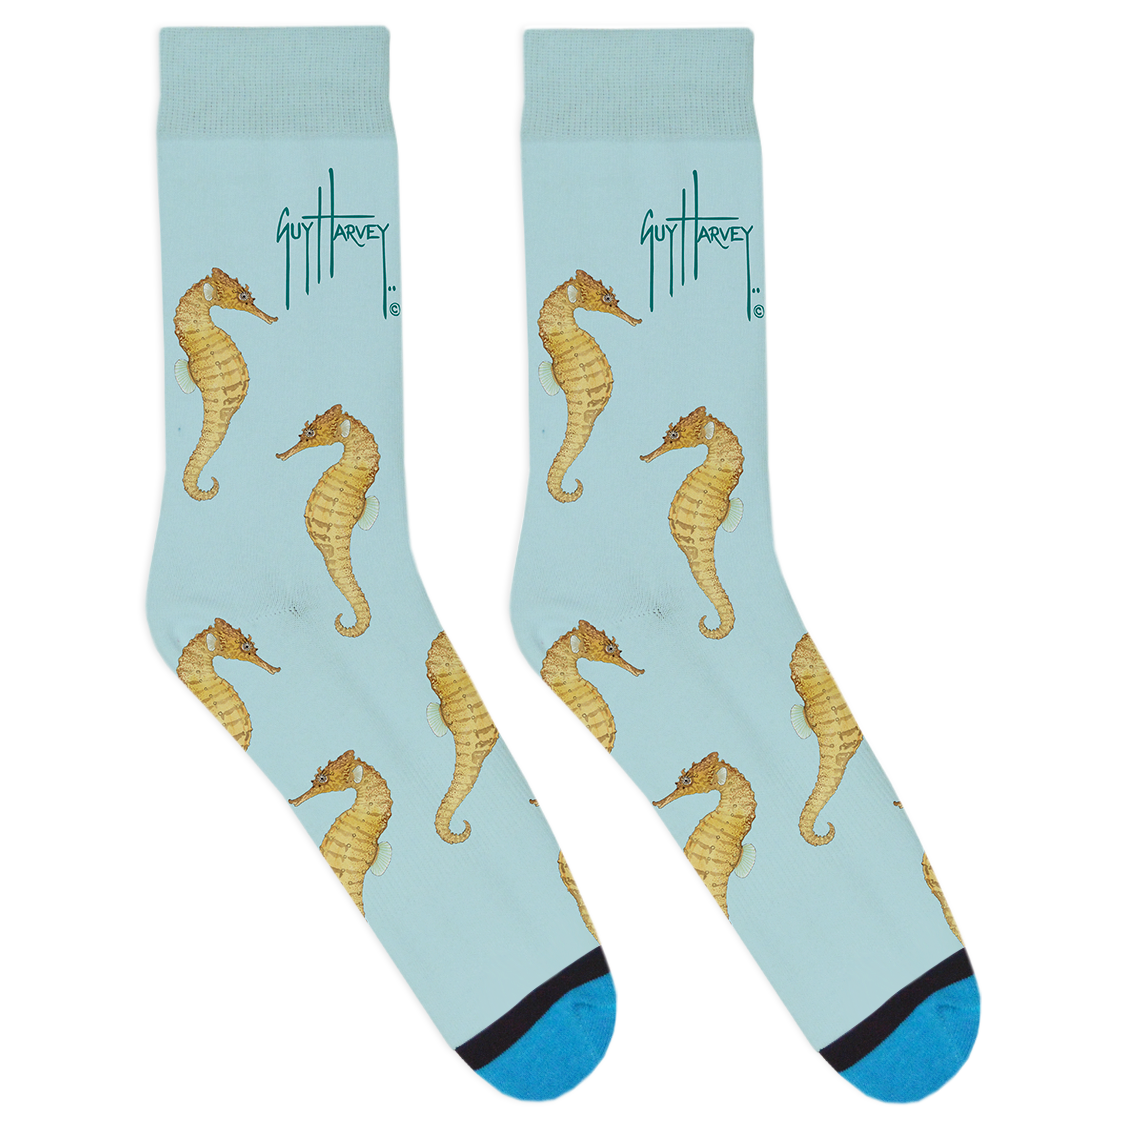 Blue Seahorse Socks View 1